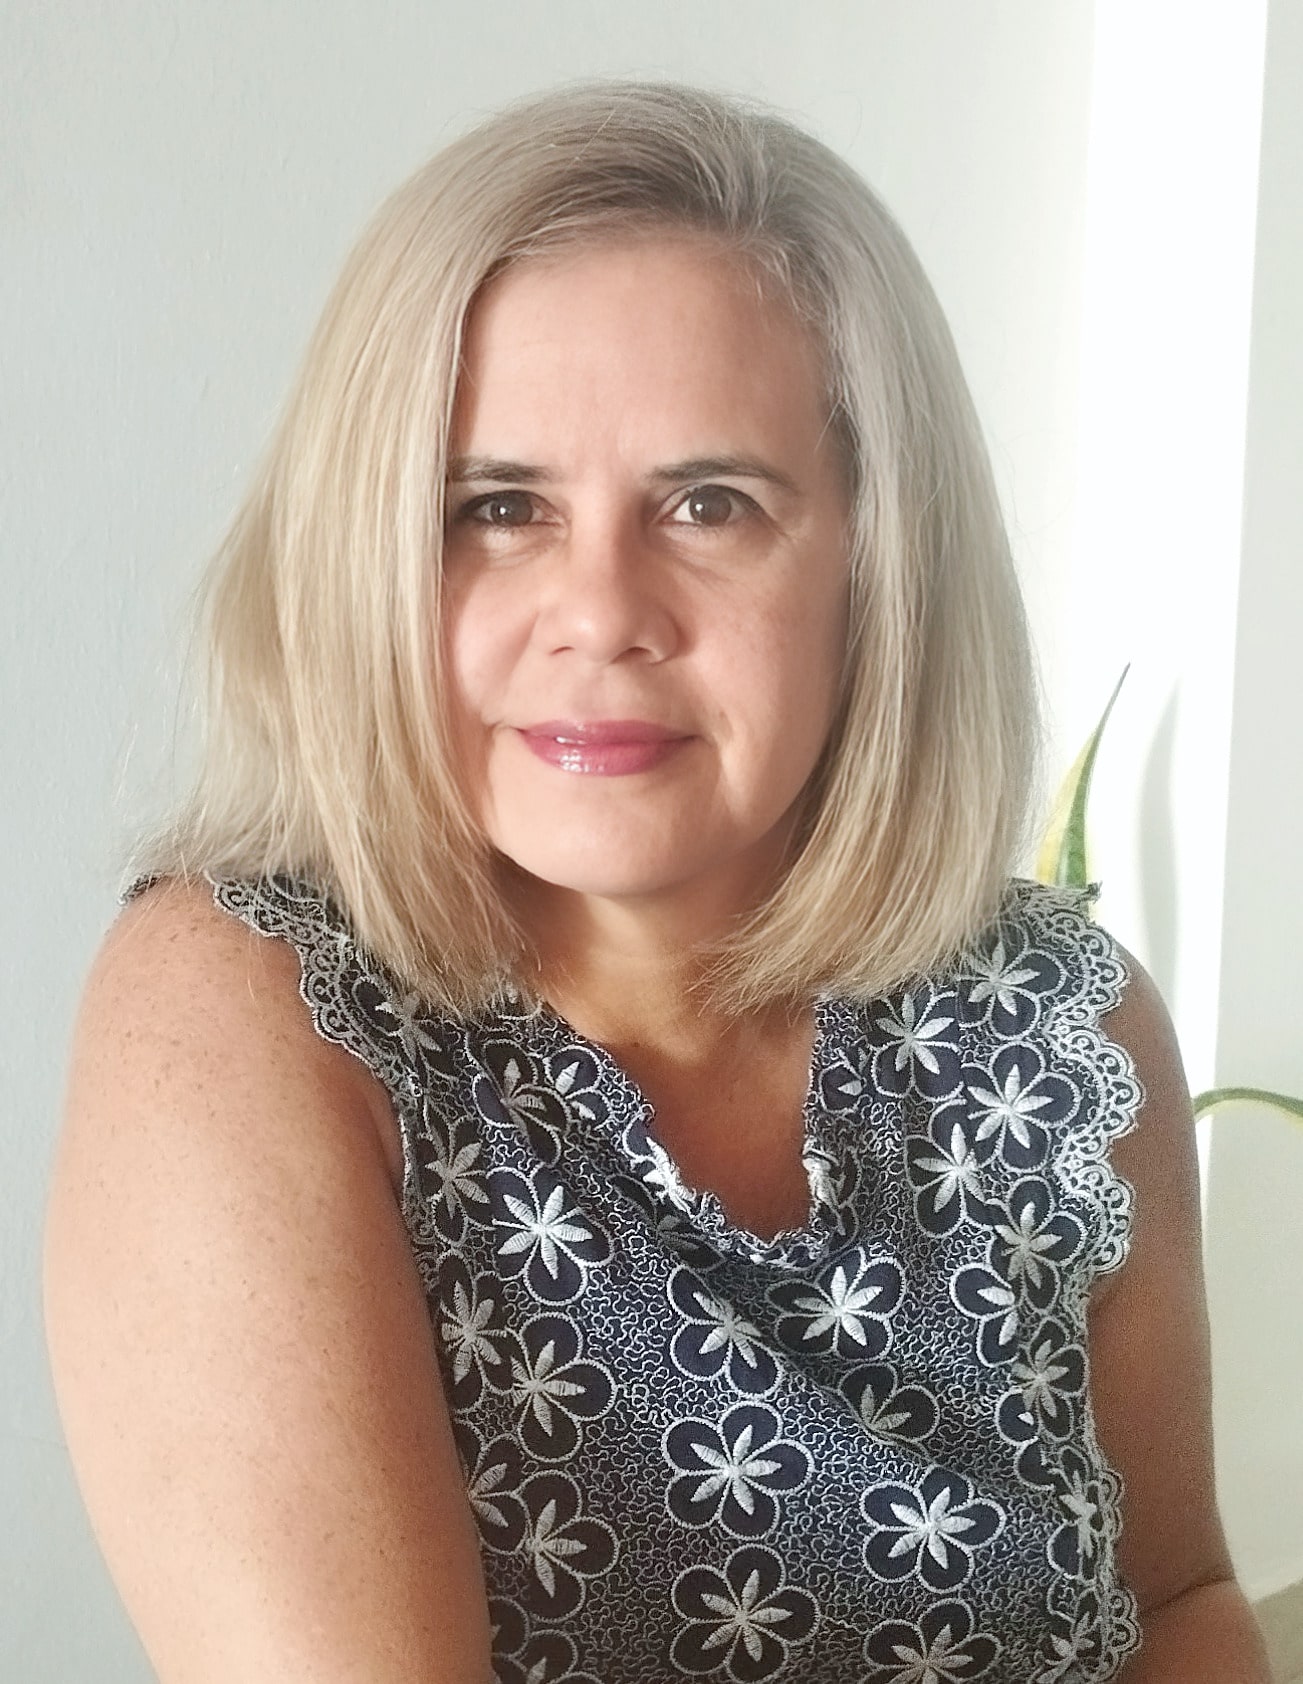 Arlet del Rosario Ferrer Sosa: Leaving an indelible mark through online volunteering